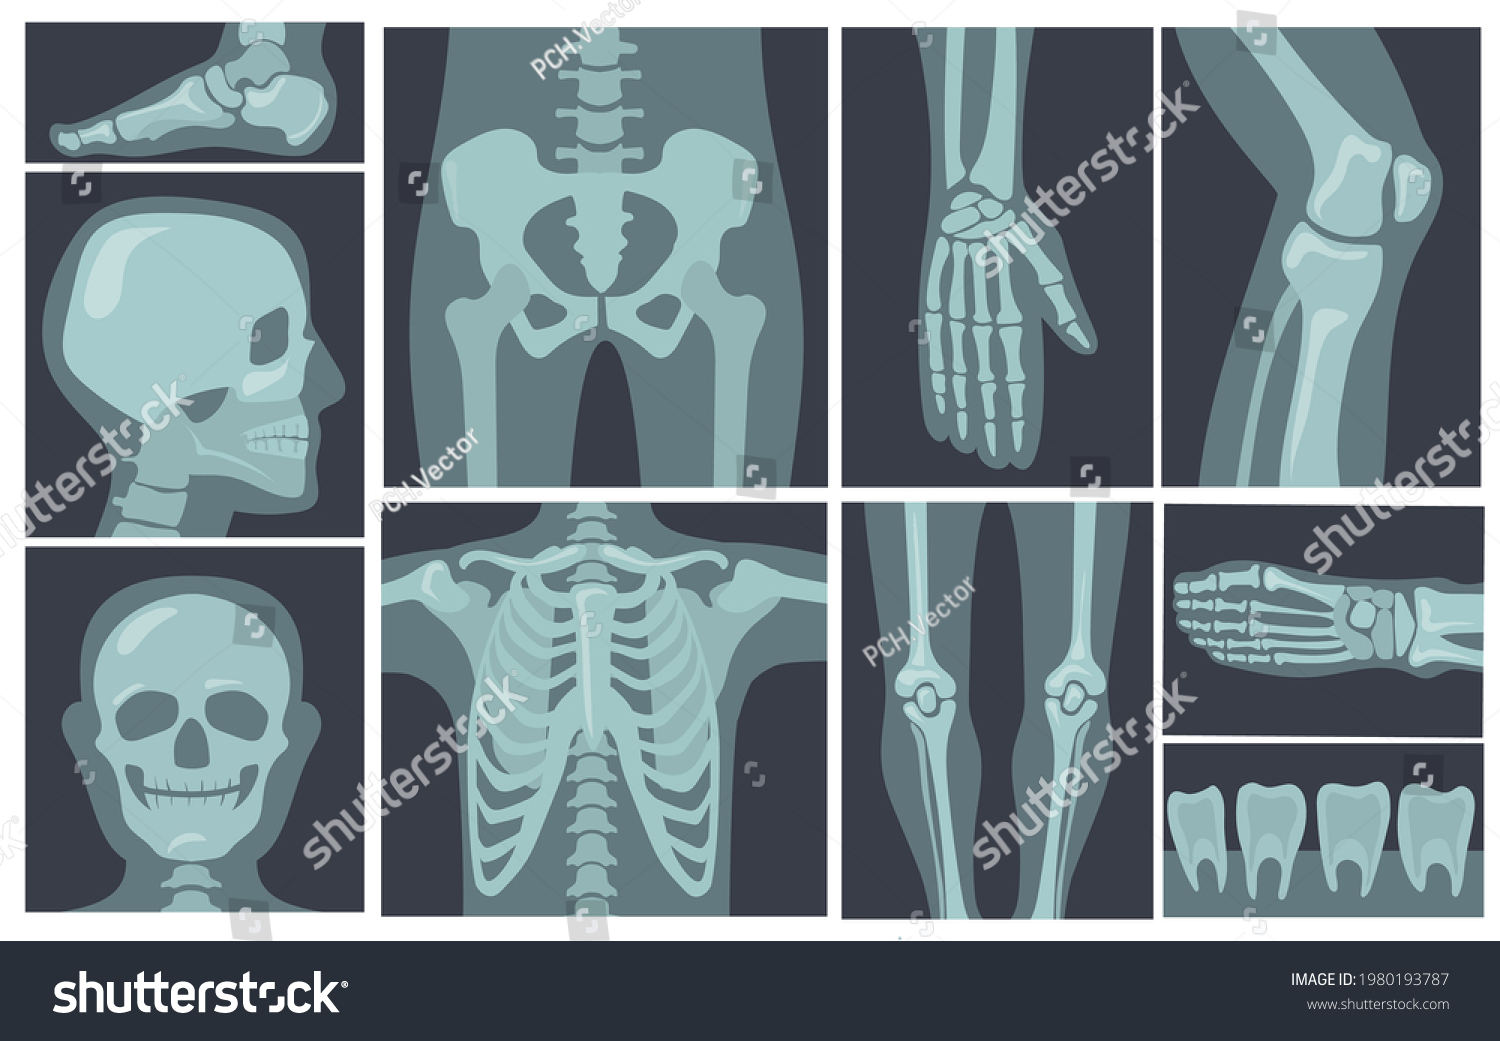 X ray cartoon Images, Stock Photos & Vectors Shutterstock